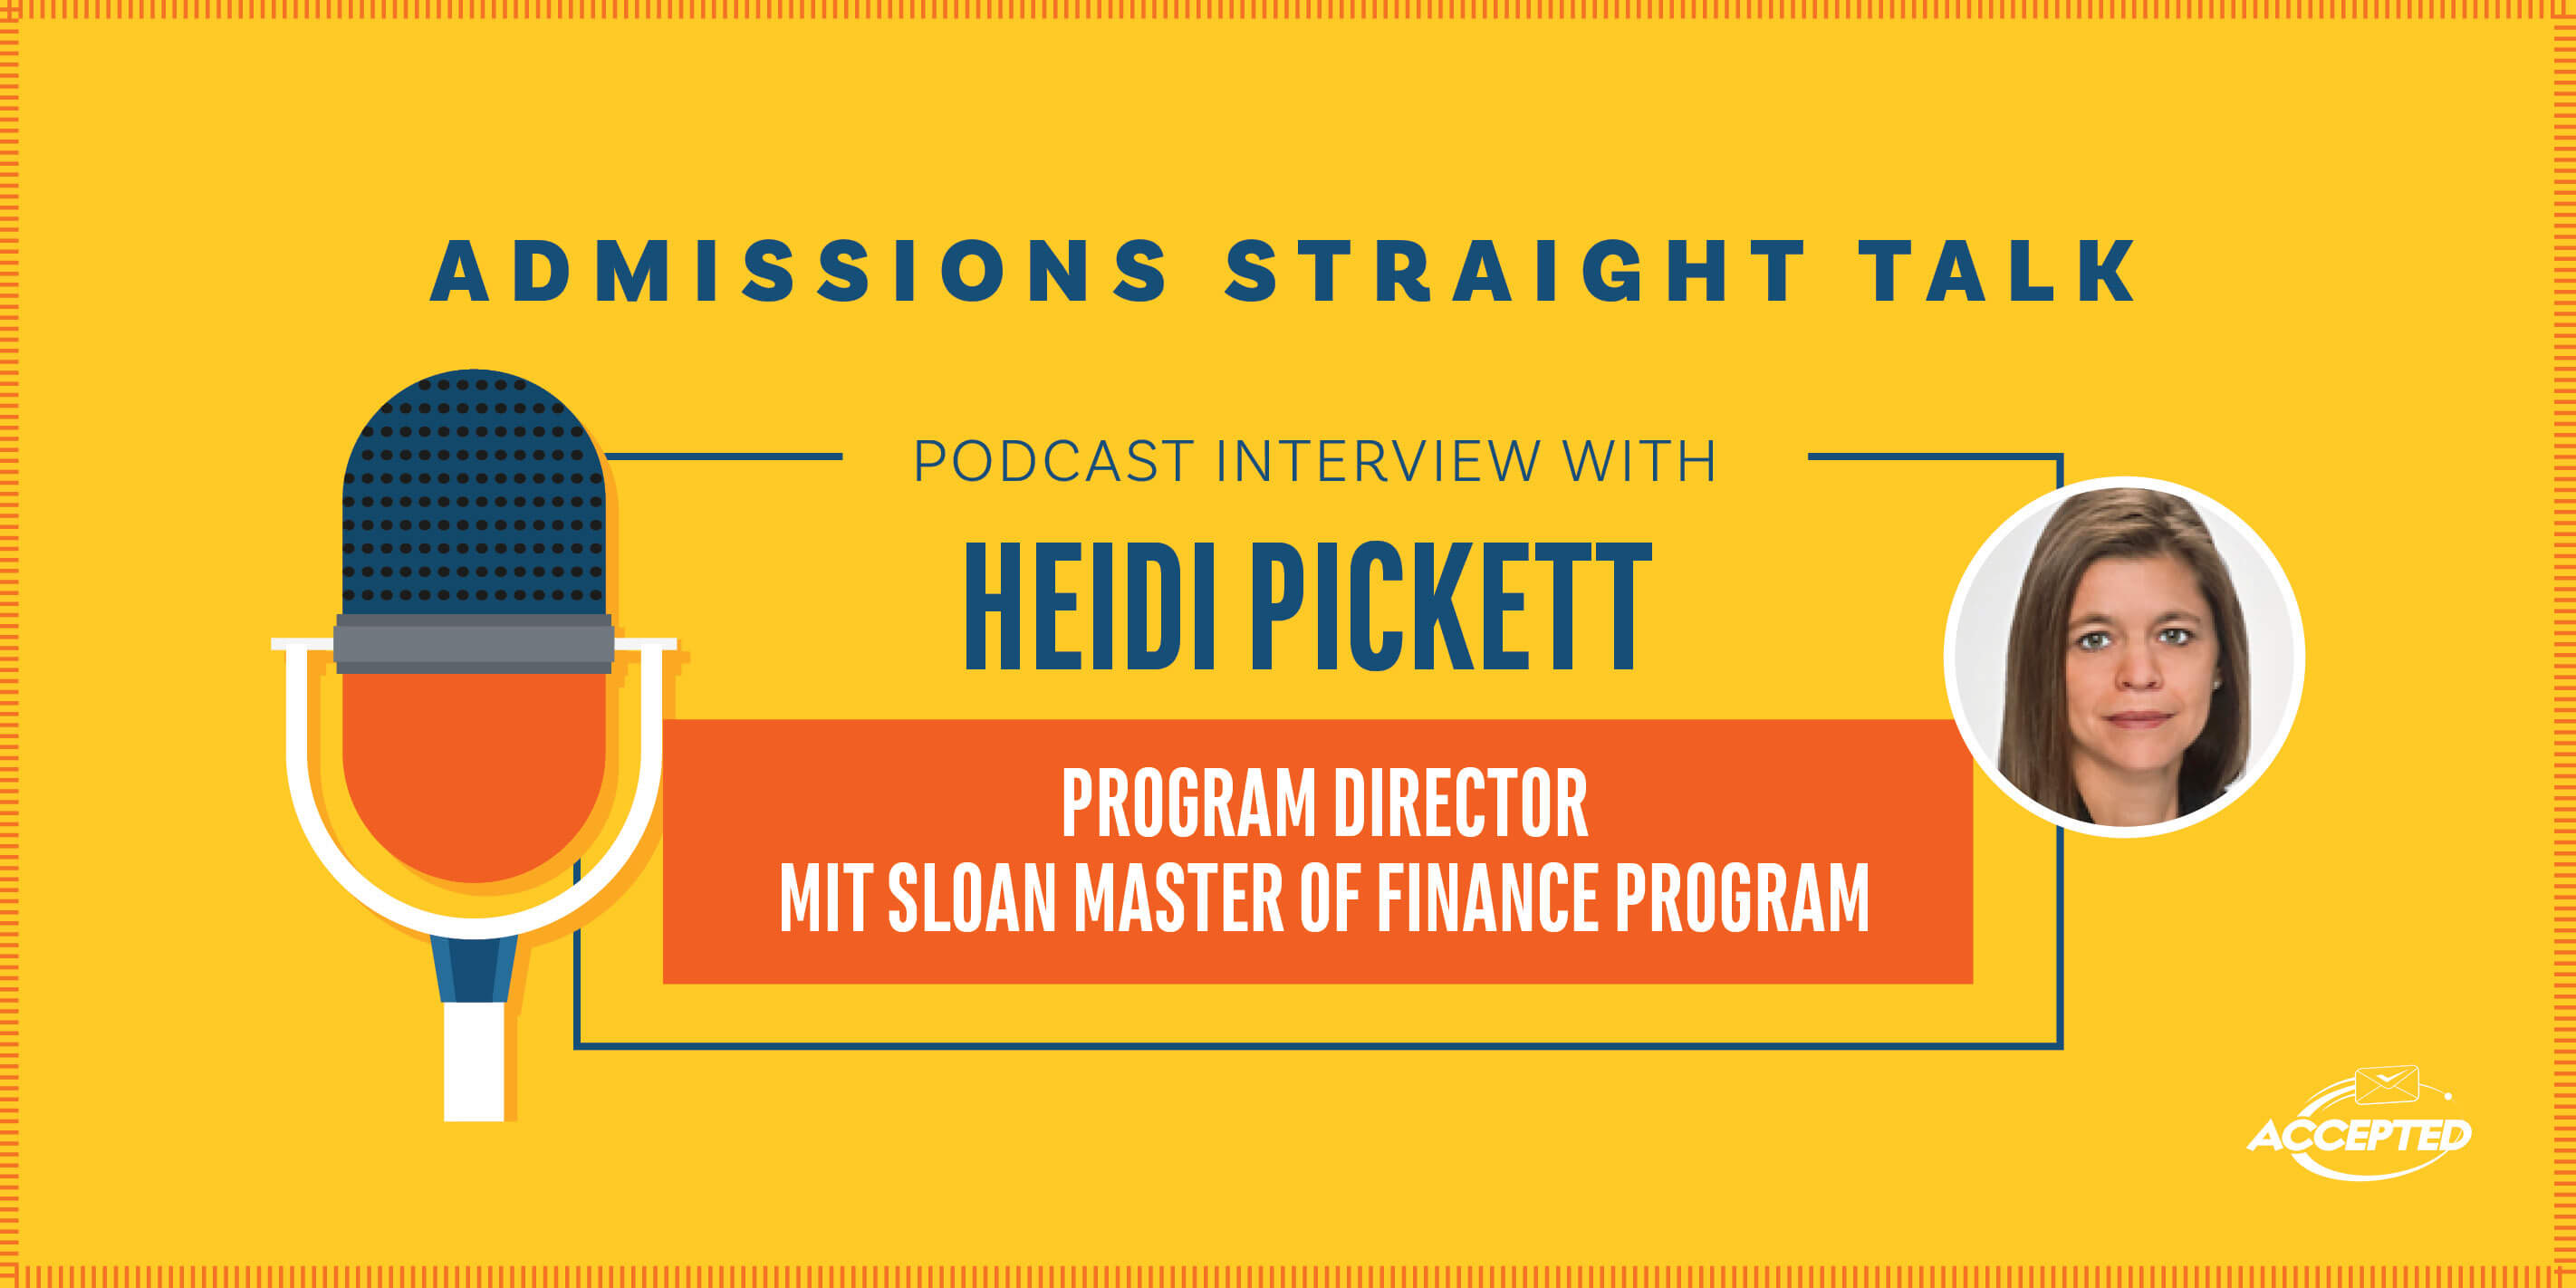 MIT Sloan Master of Finance Program Heidi Pickett